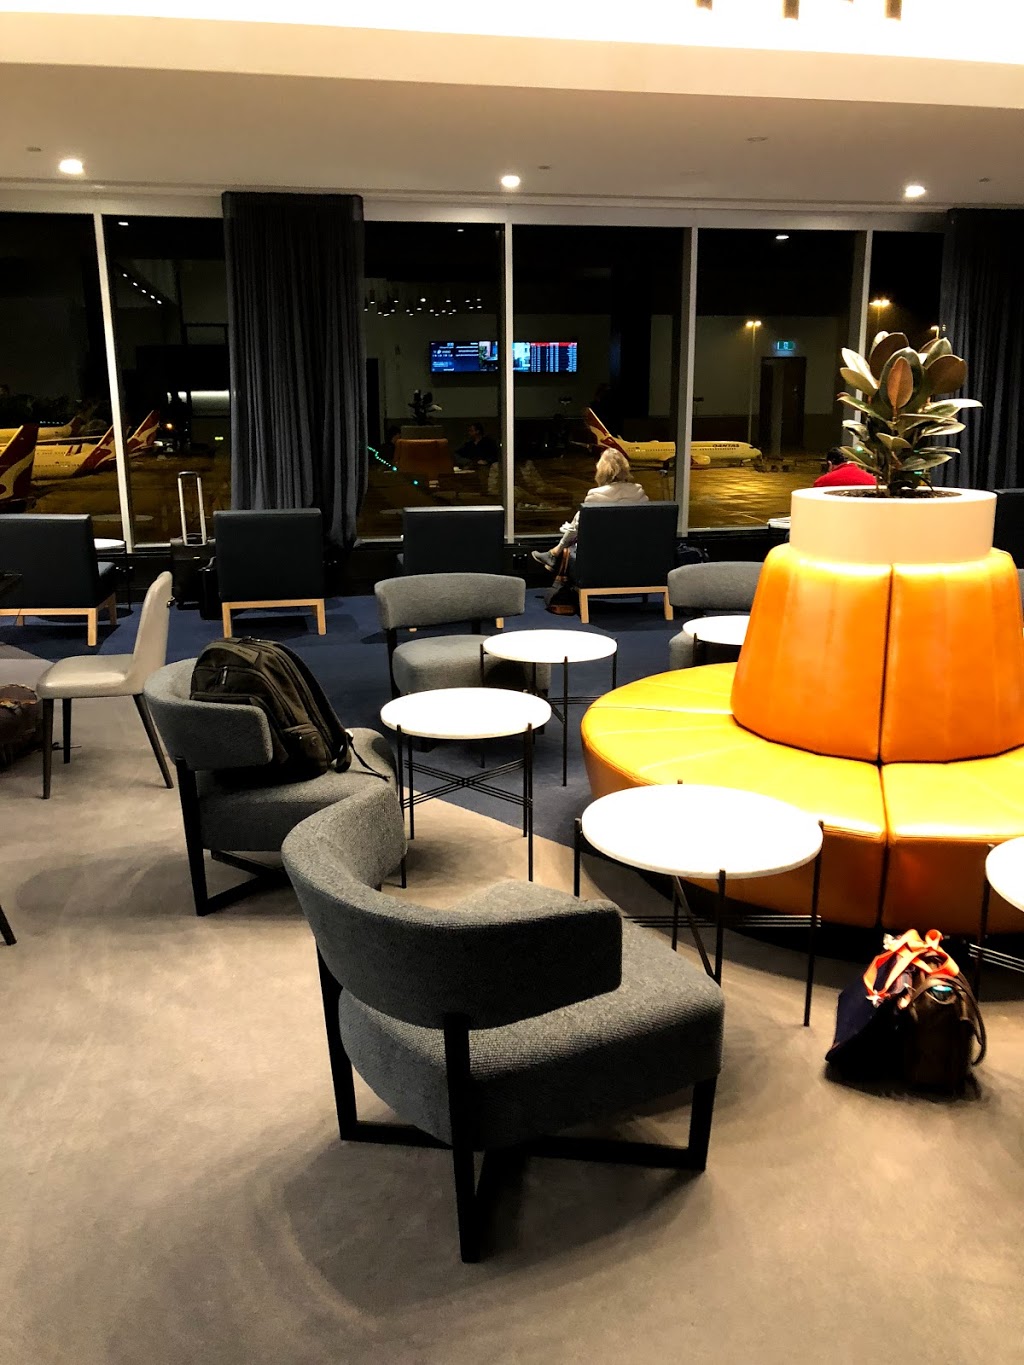 Qantas Business Lounge | night club | Melbourne Airport VIC 3045, Australia